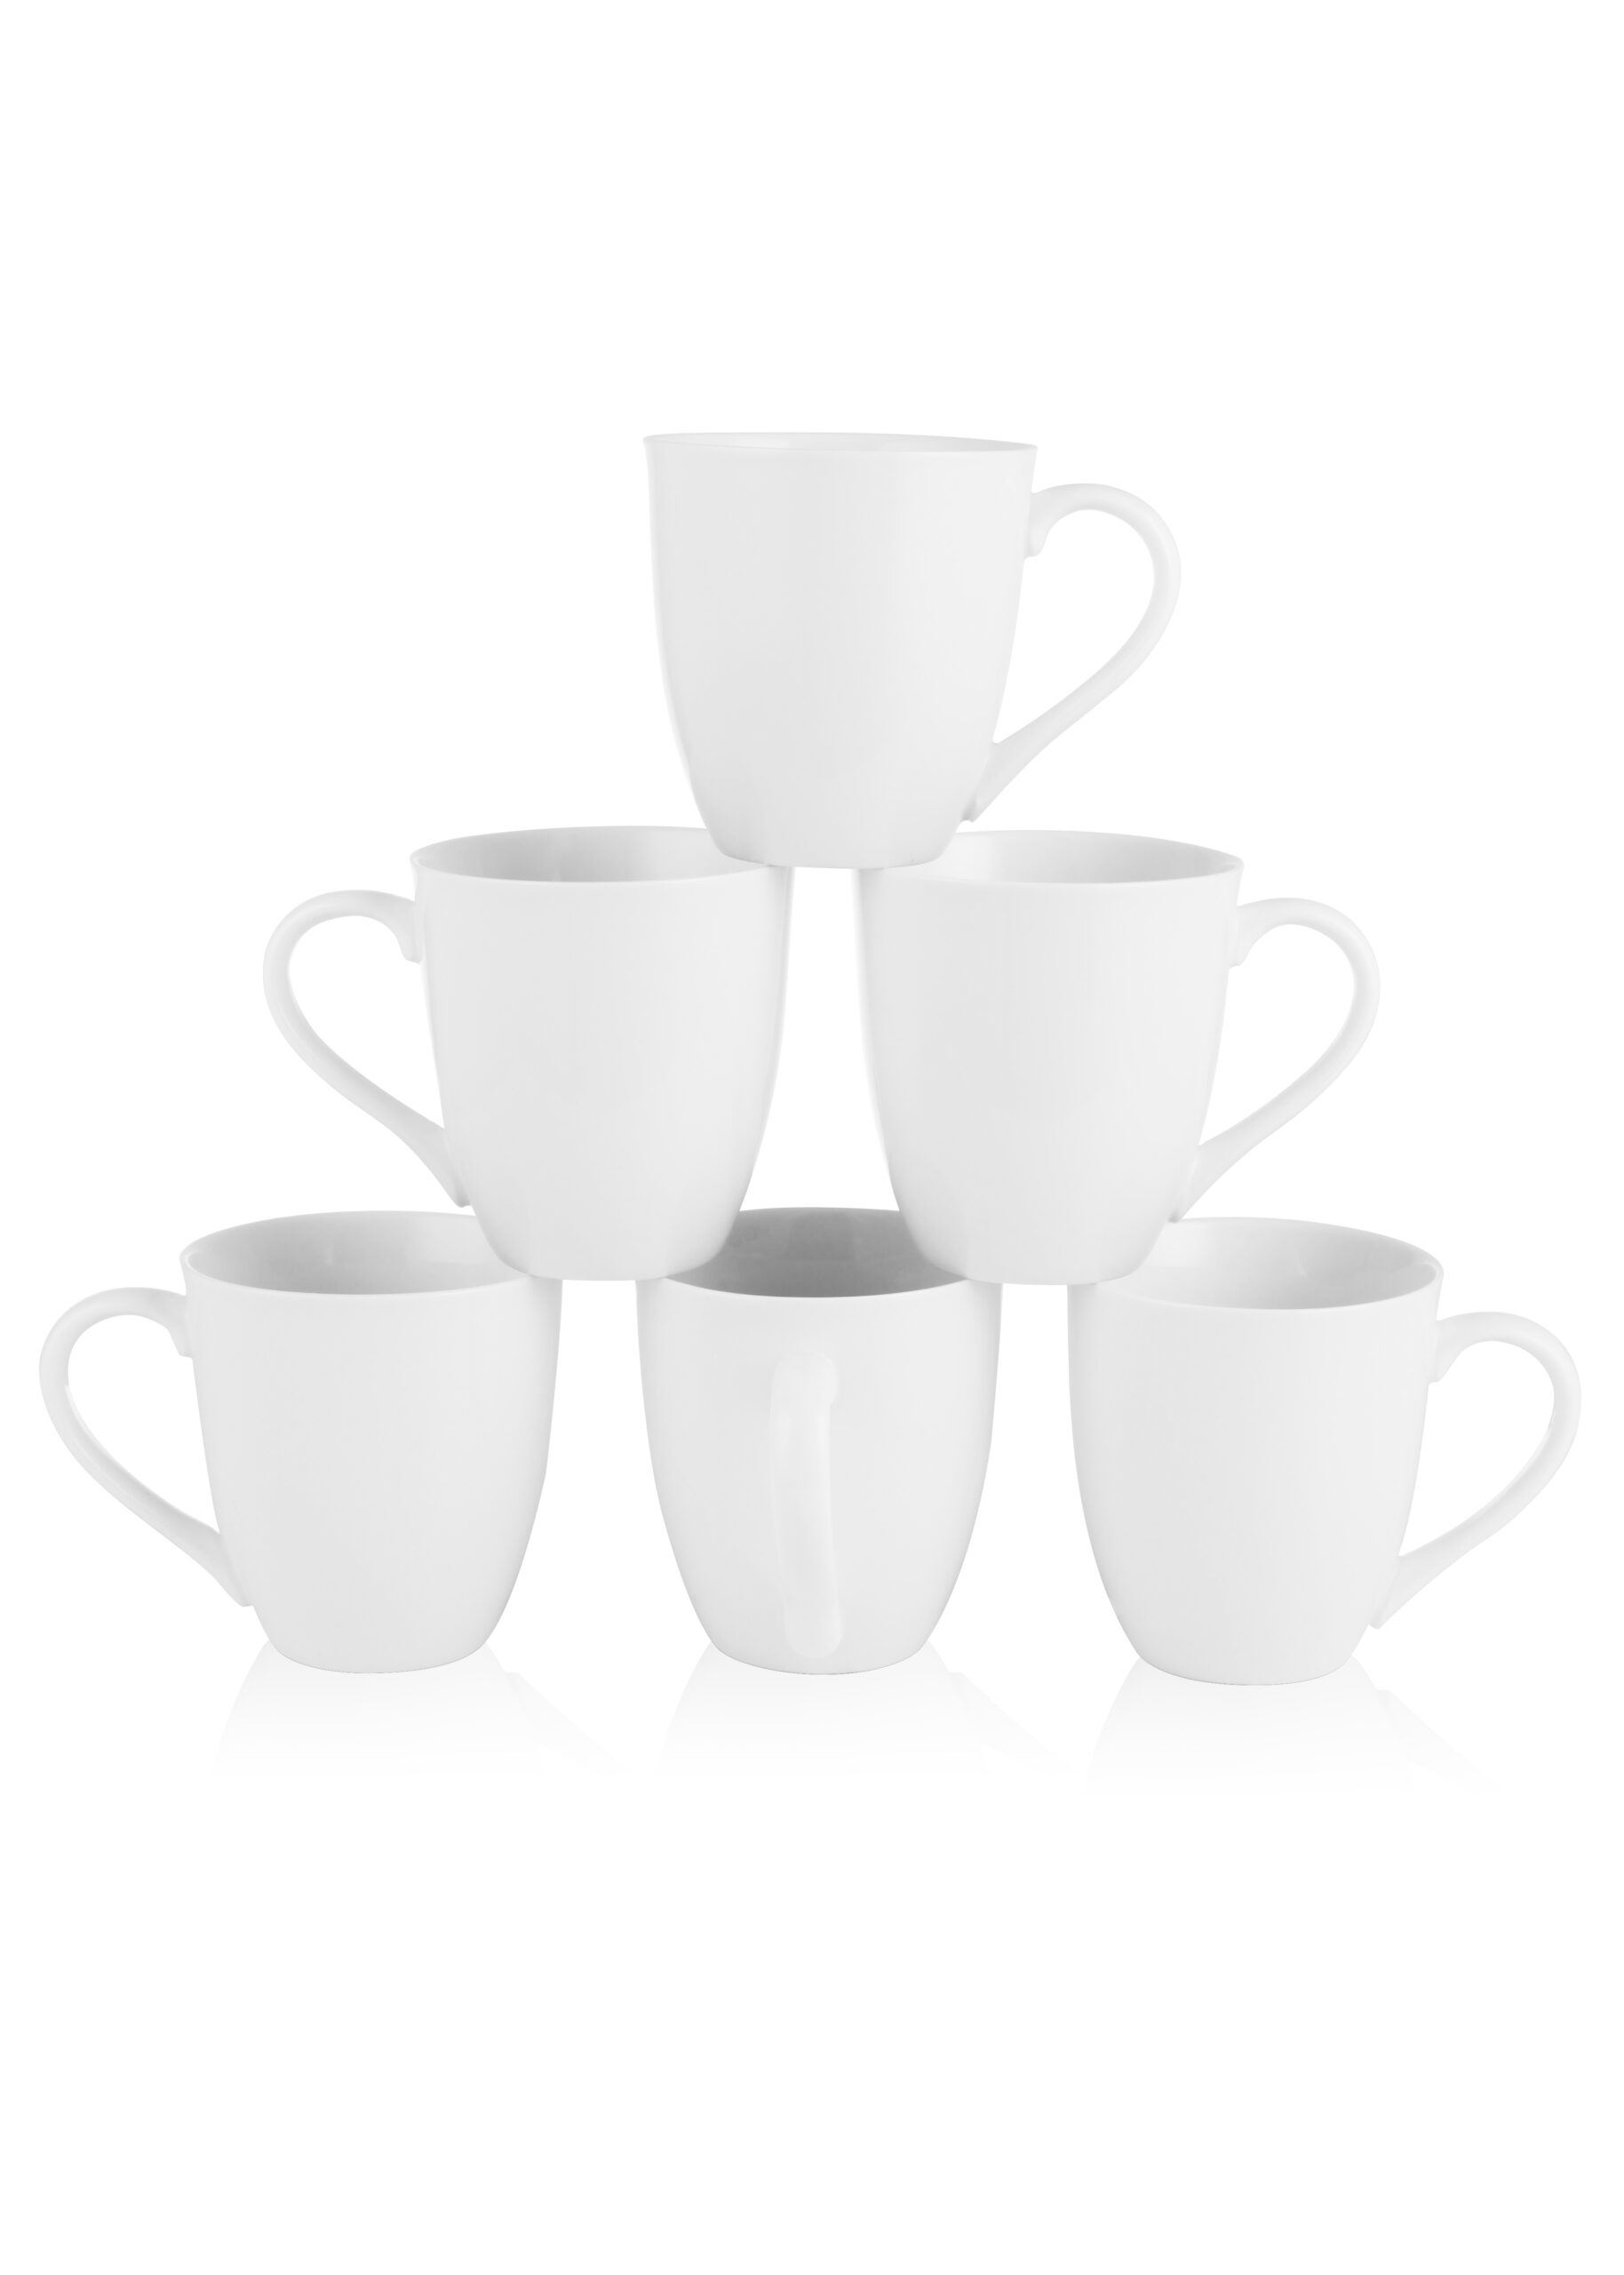 https://www.vicrays.com/wp-content/uploads/2021/06/1_white-mug-set-1-scaled.jpg